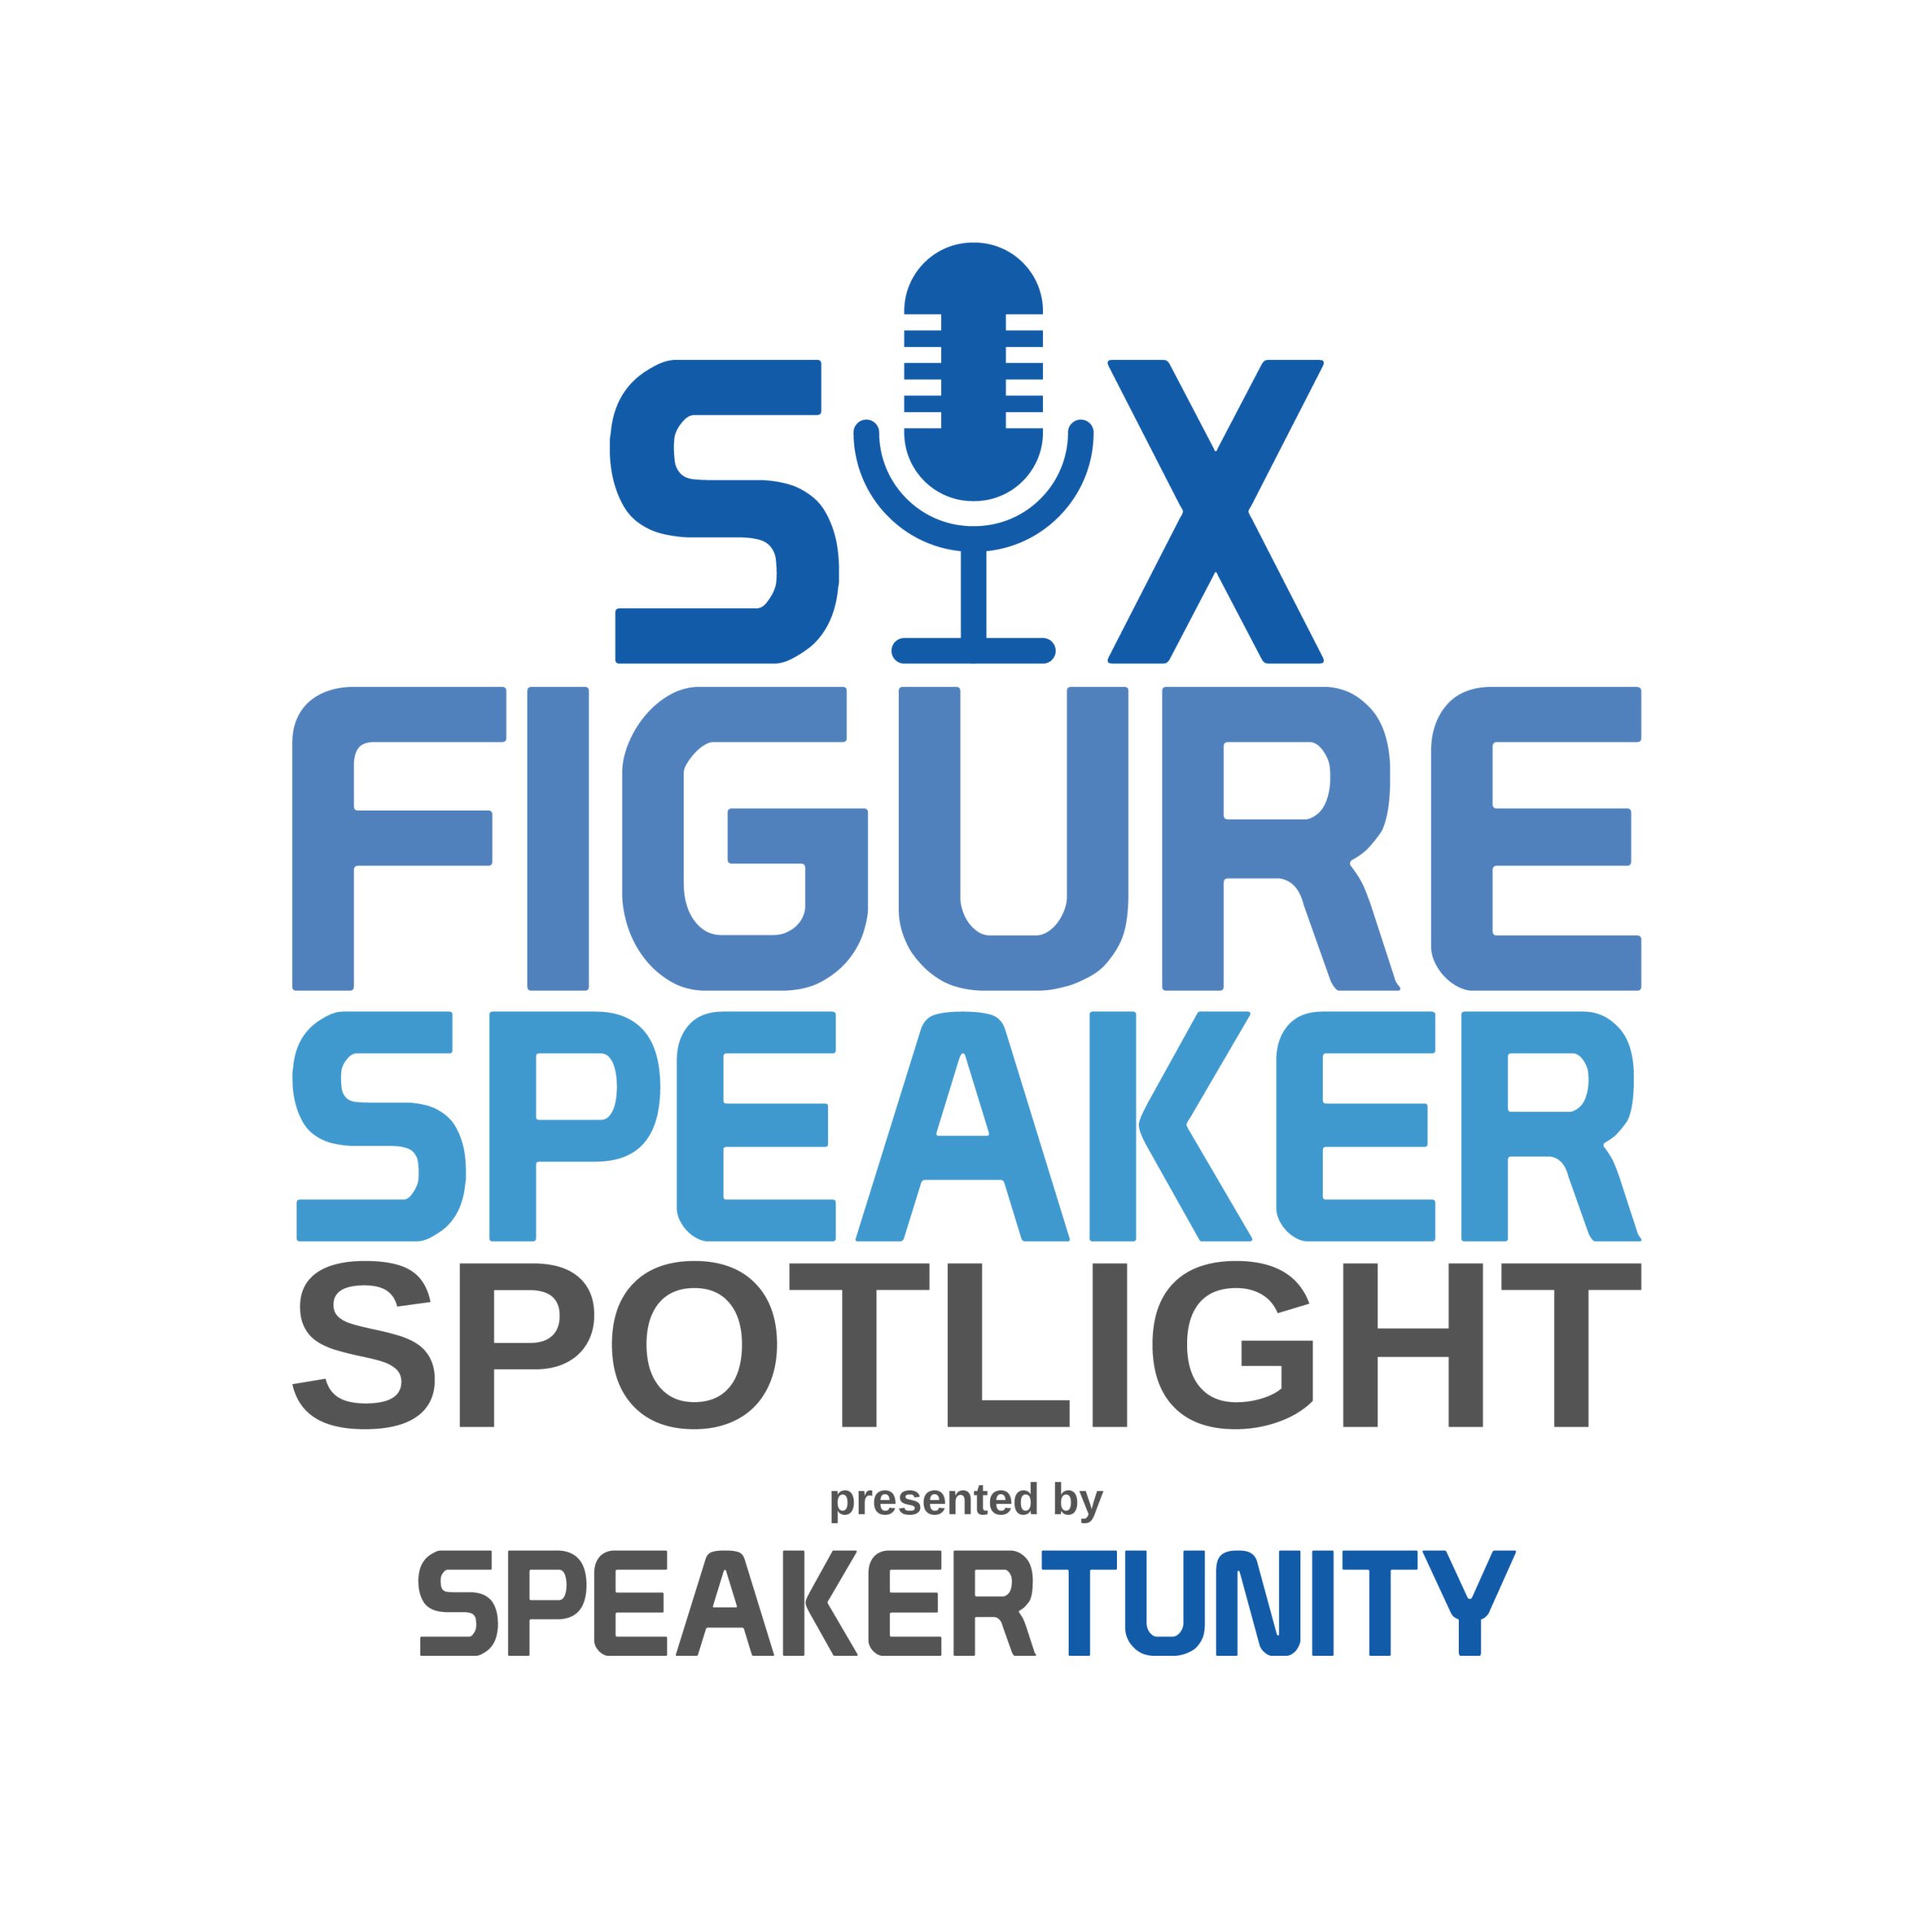 Six-Figure Speaker Sporlight